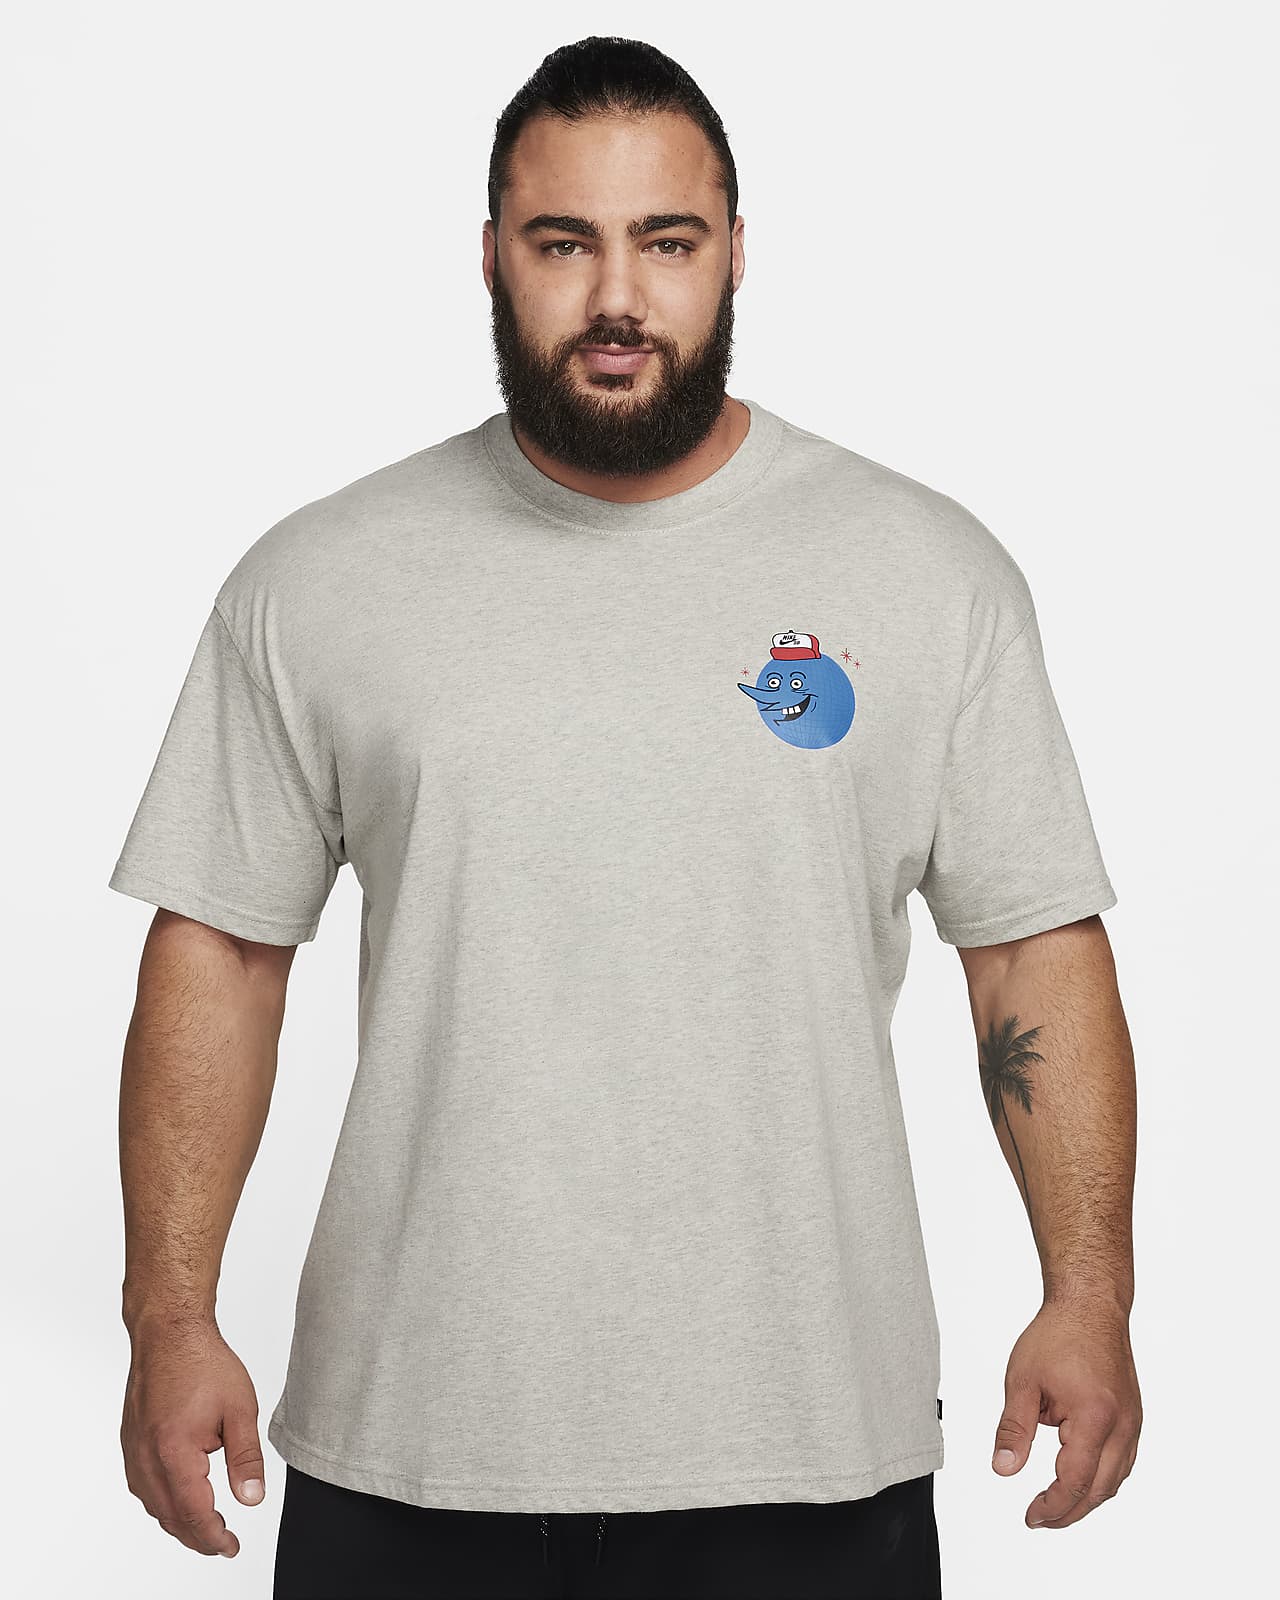 Nike SB Men\'s Skate T-Shirt.